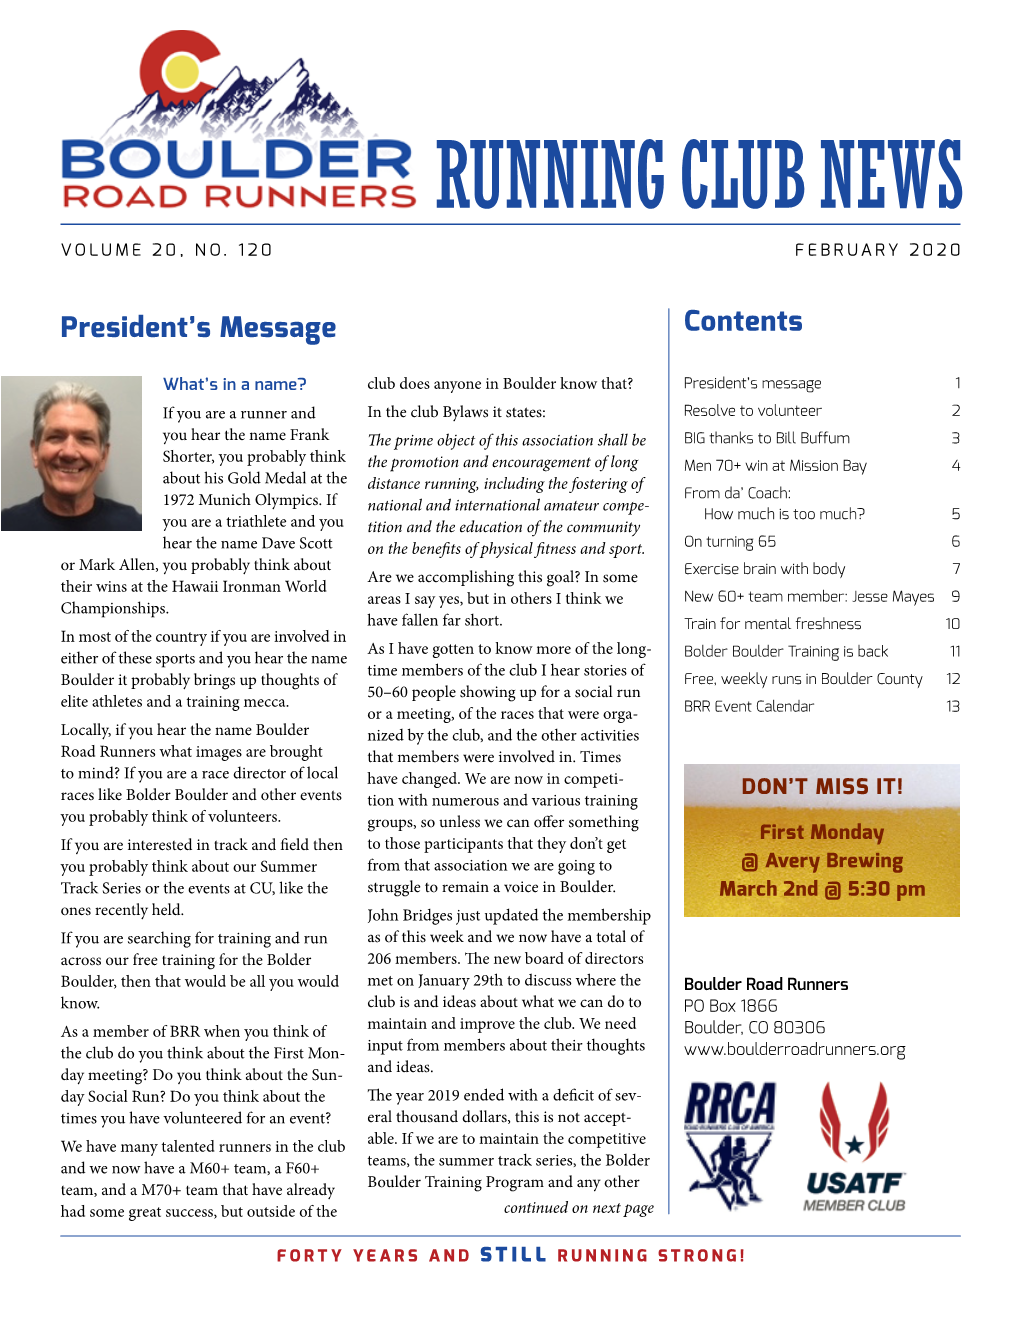 Running Club News Volume 20, No